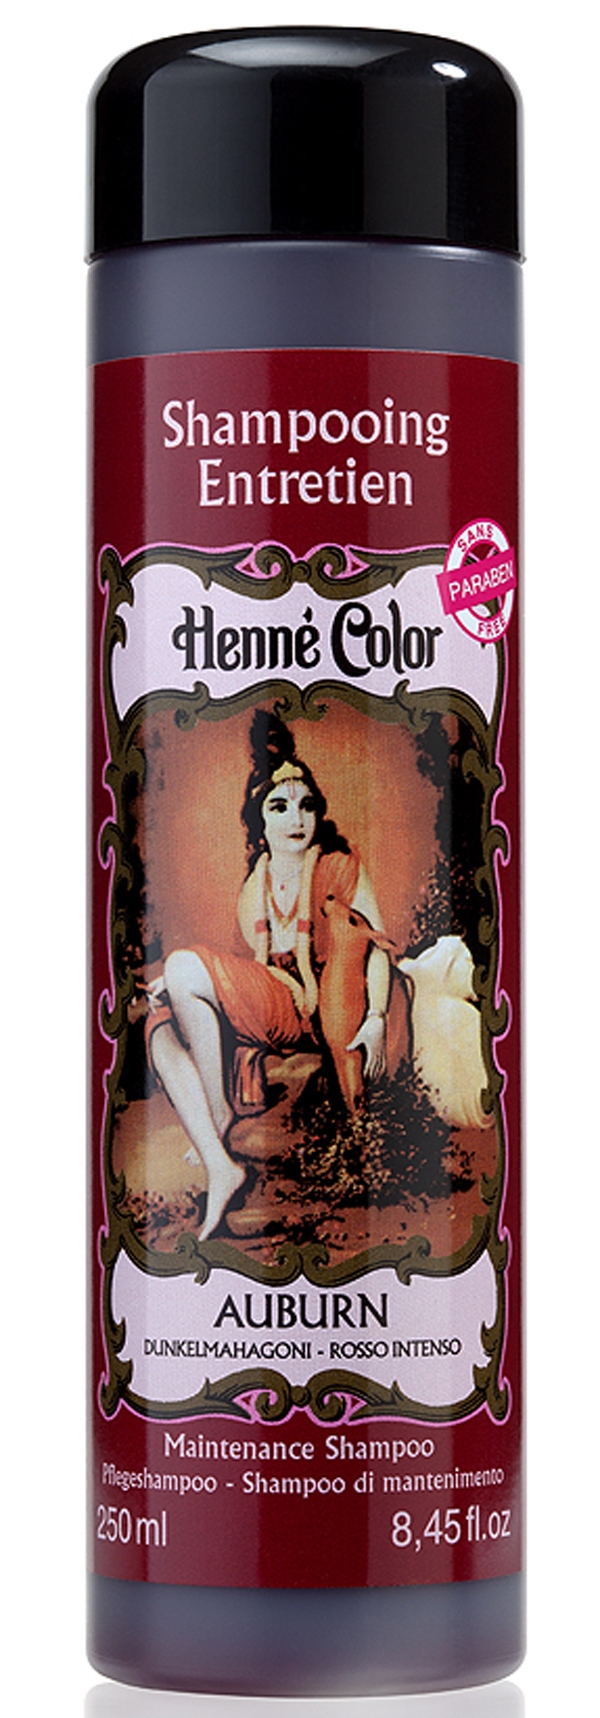 Pack of 3 maintenance shampoos Henna Color auburn 250ml